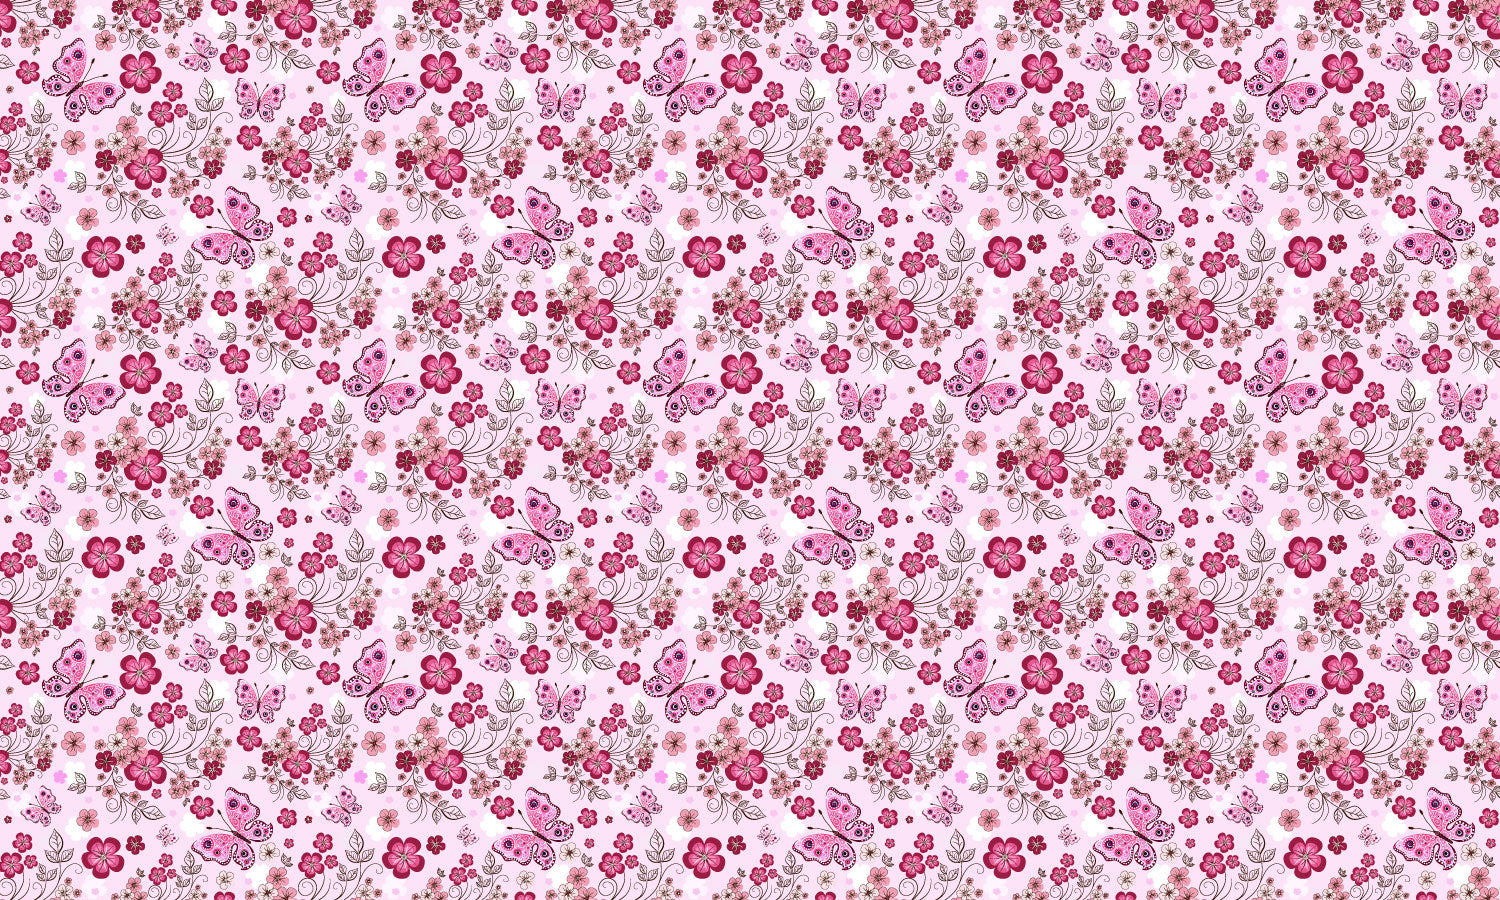 Paneli za kuhinje Pink seamless floral pattern -  Stakleni / PVC ploče / Pleksiglas -  sa printom za kuhinju, Zidne obloge PKU353